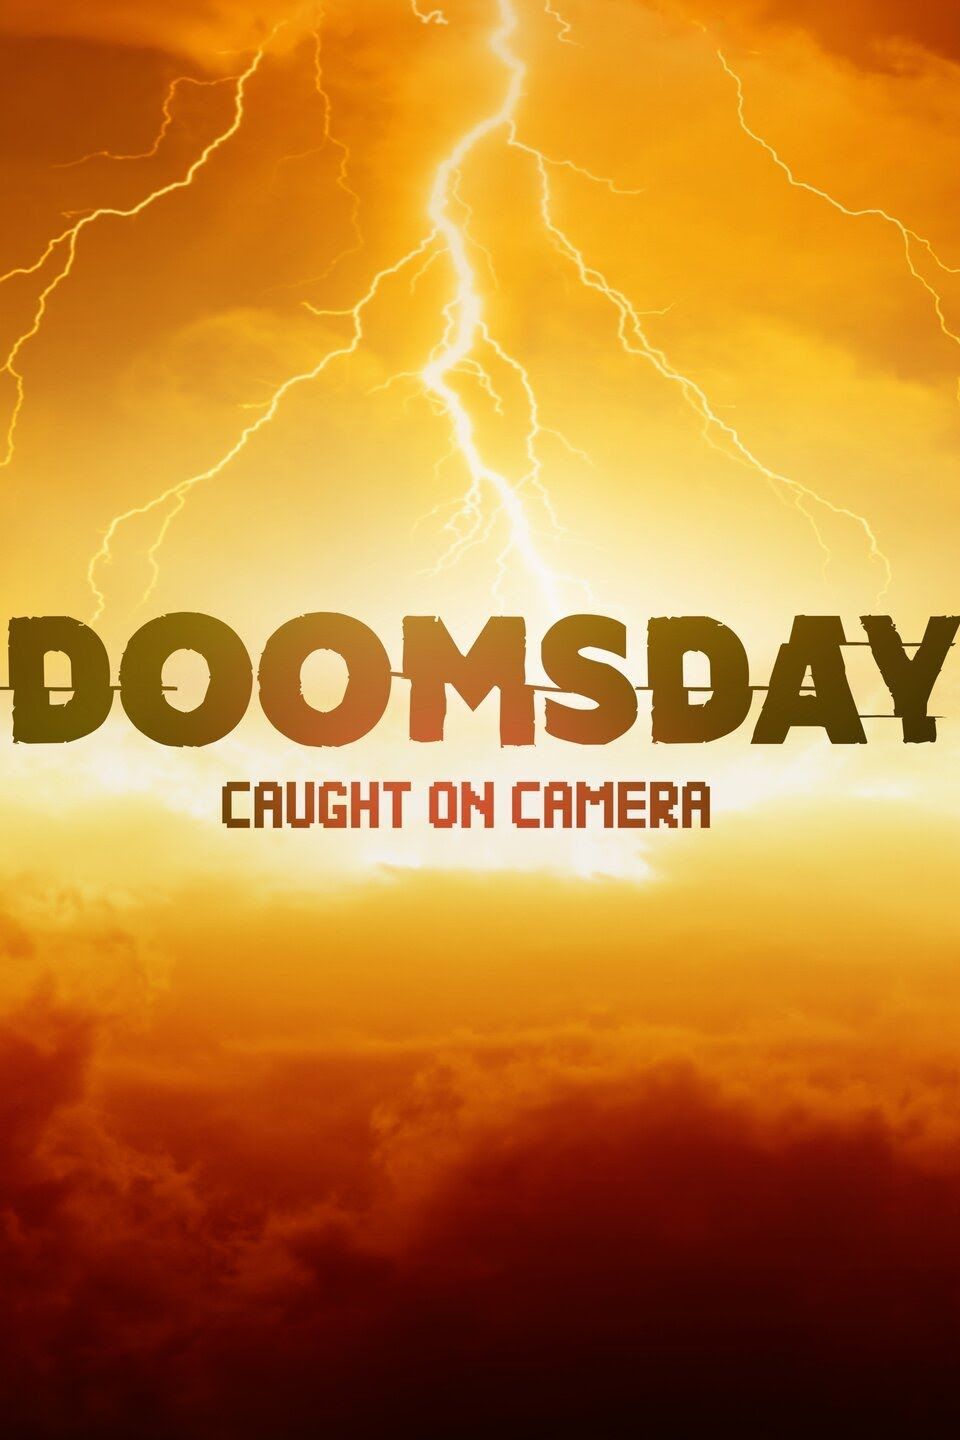 Doomsday Caught on Camera ne zaman